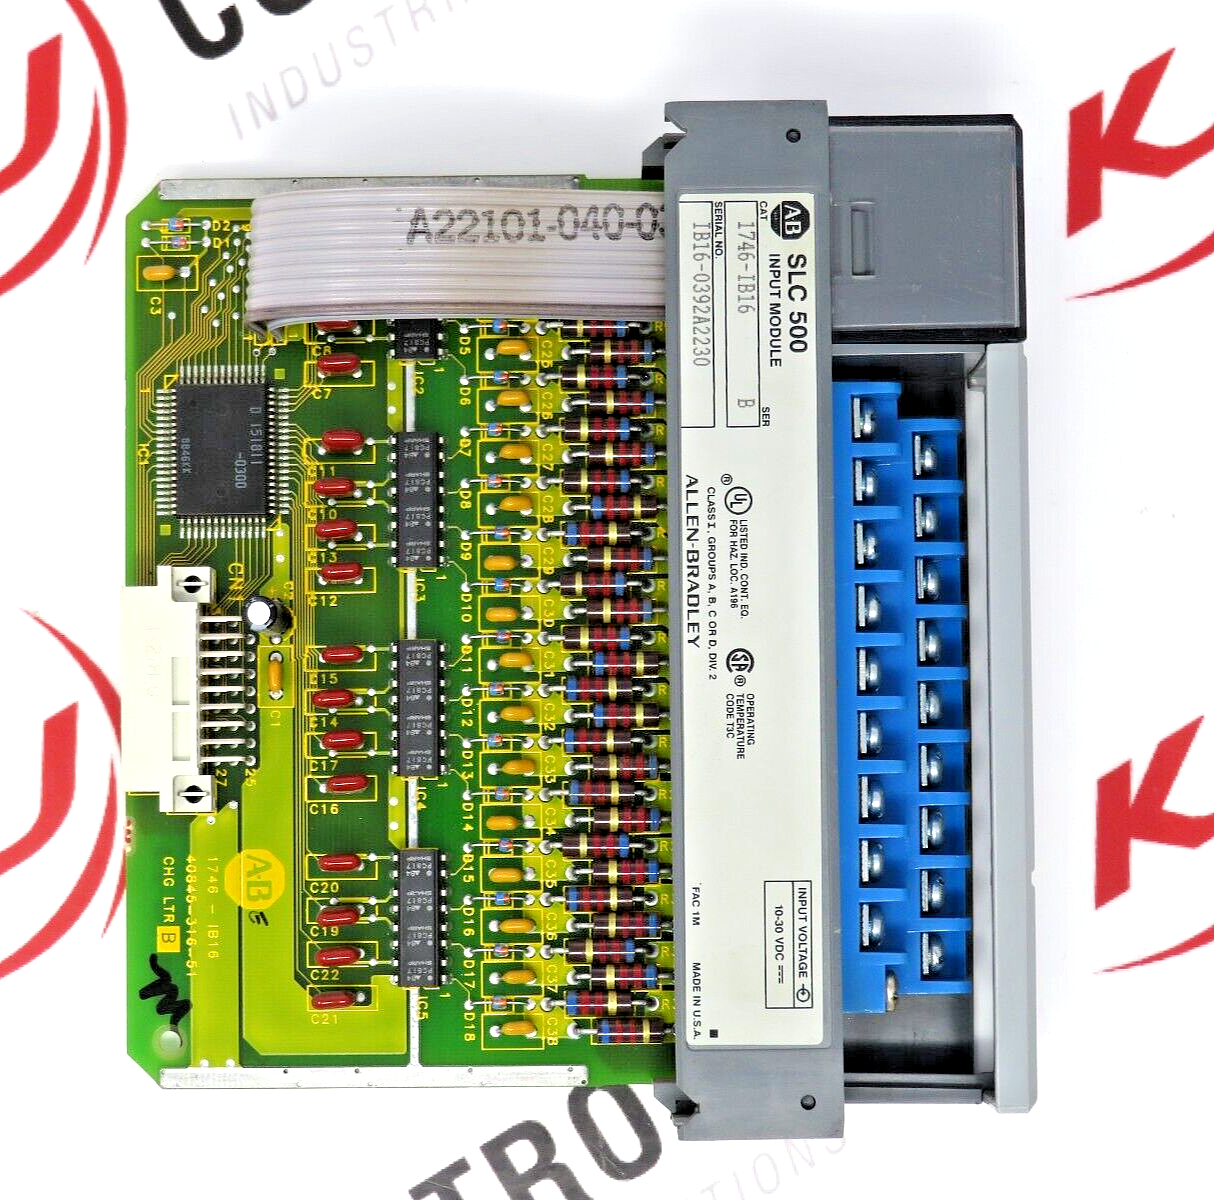 Allen-Bradley SLC 500 1746-IB16 Series B / C Digital 16-Point DC Input Module